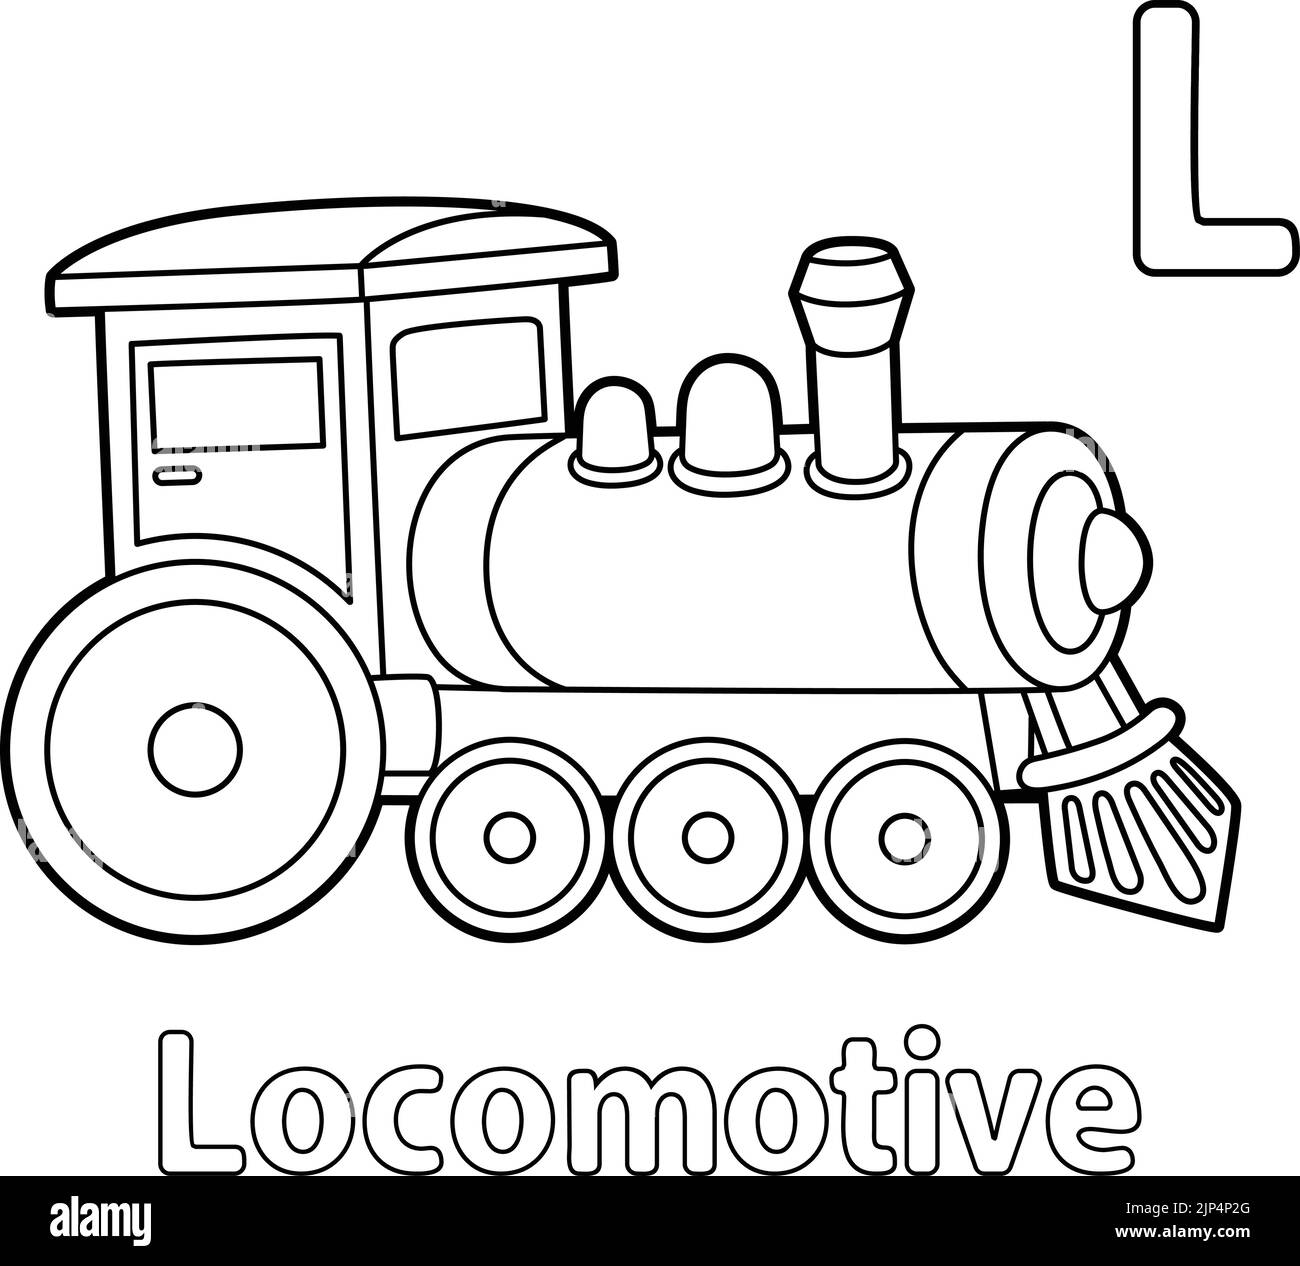 Locomotive Alphabet ABC Coloring Page L Stock Vector